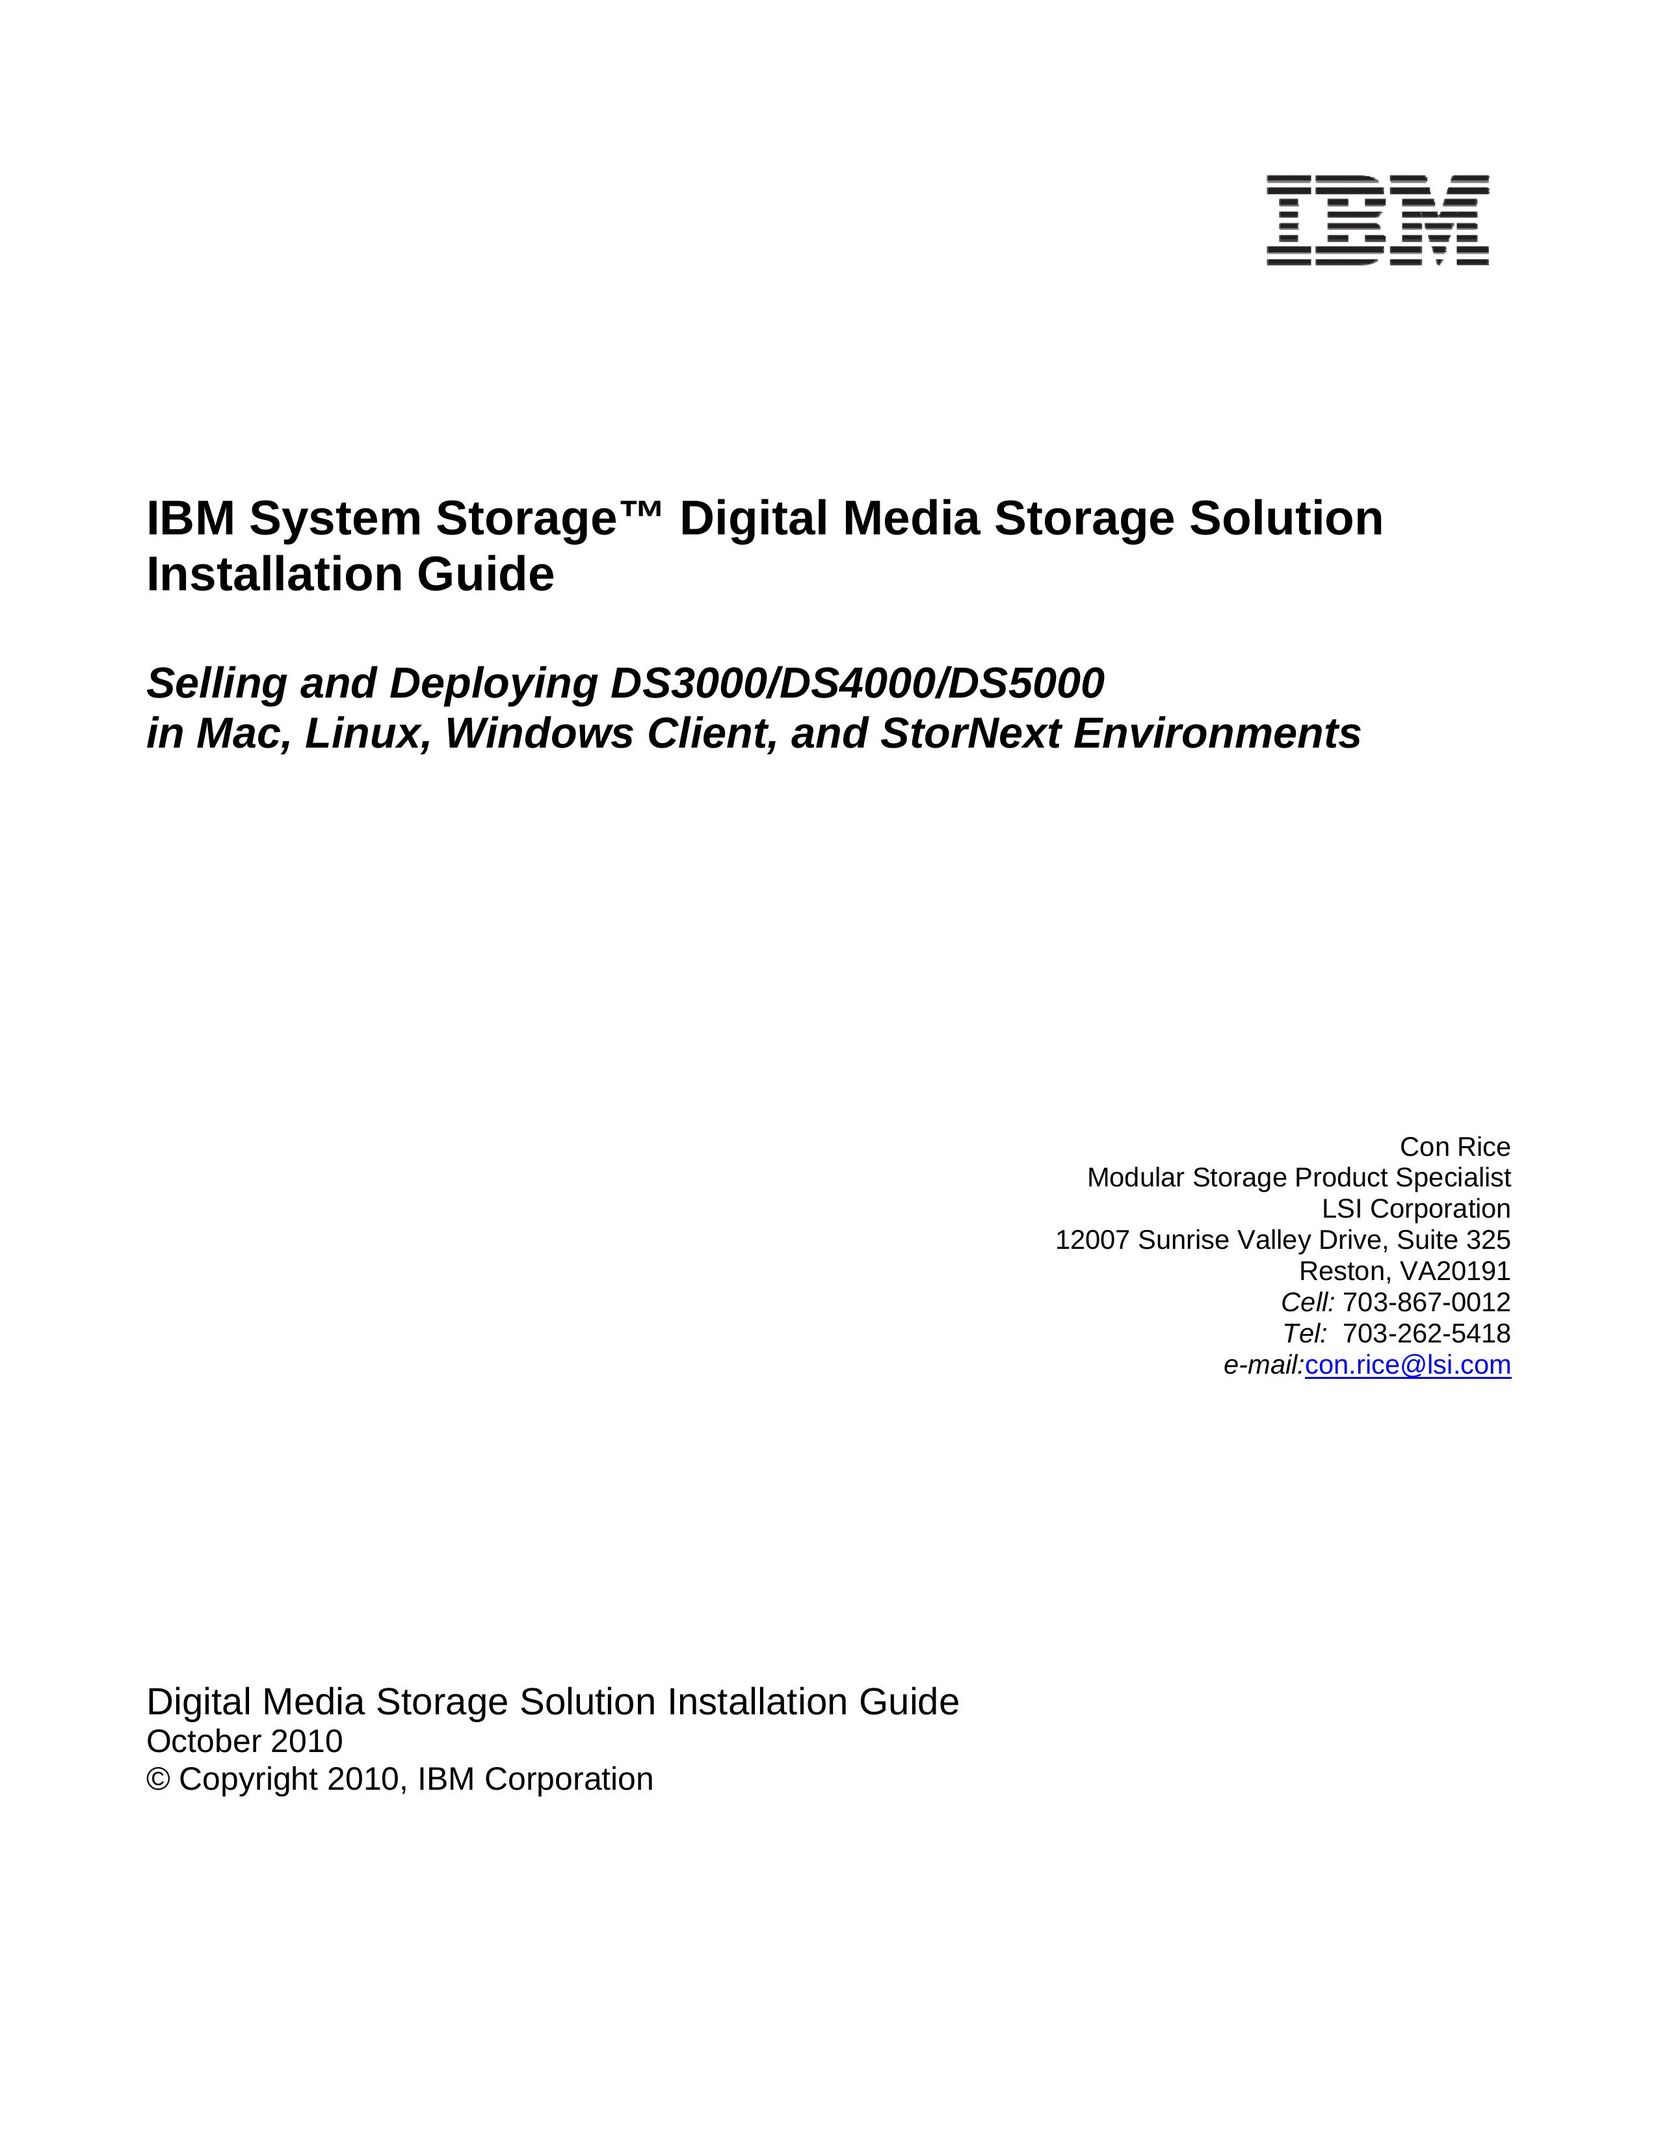 IBM DS5000 Portable Media Storage User Manual